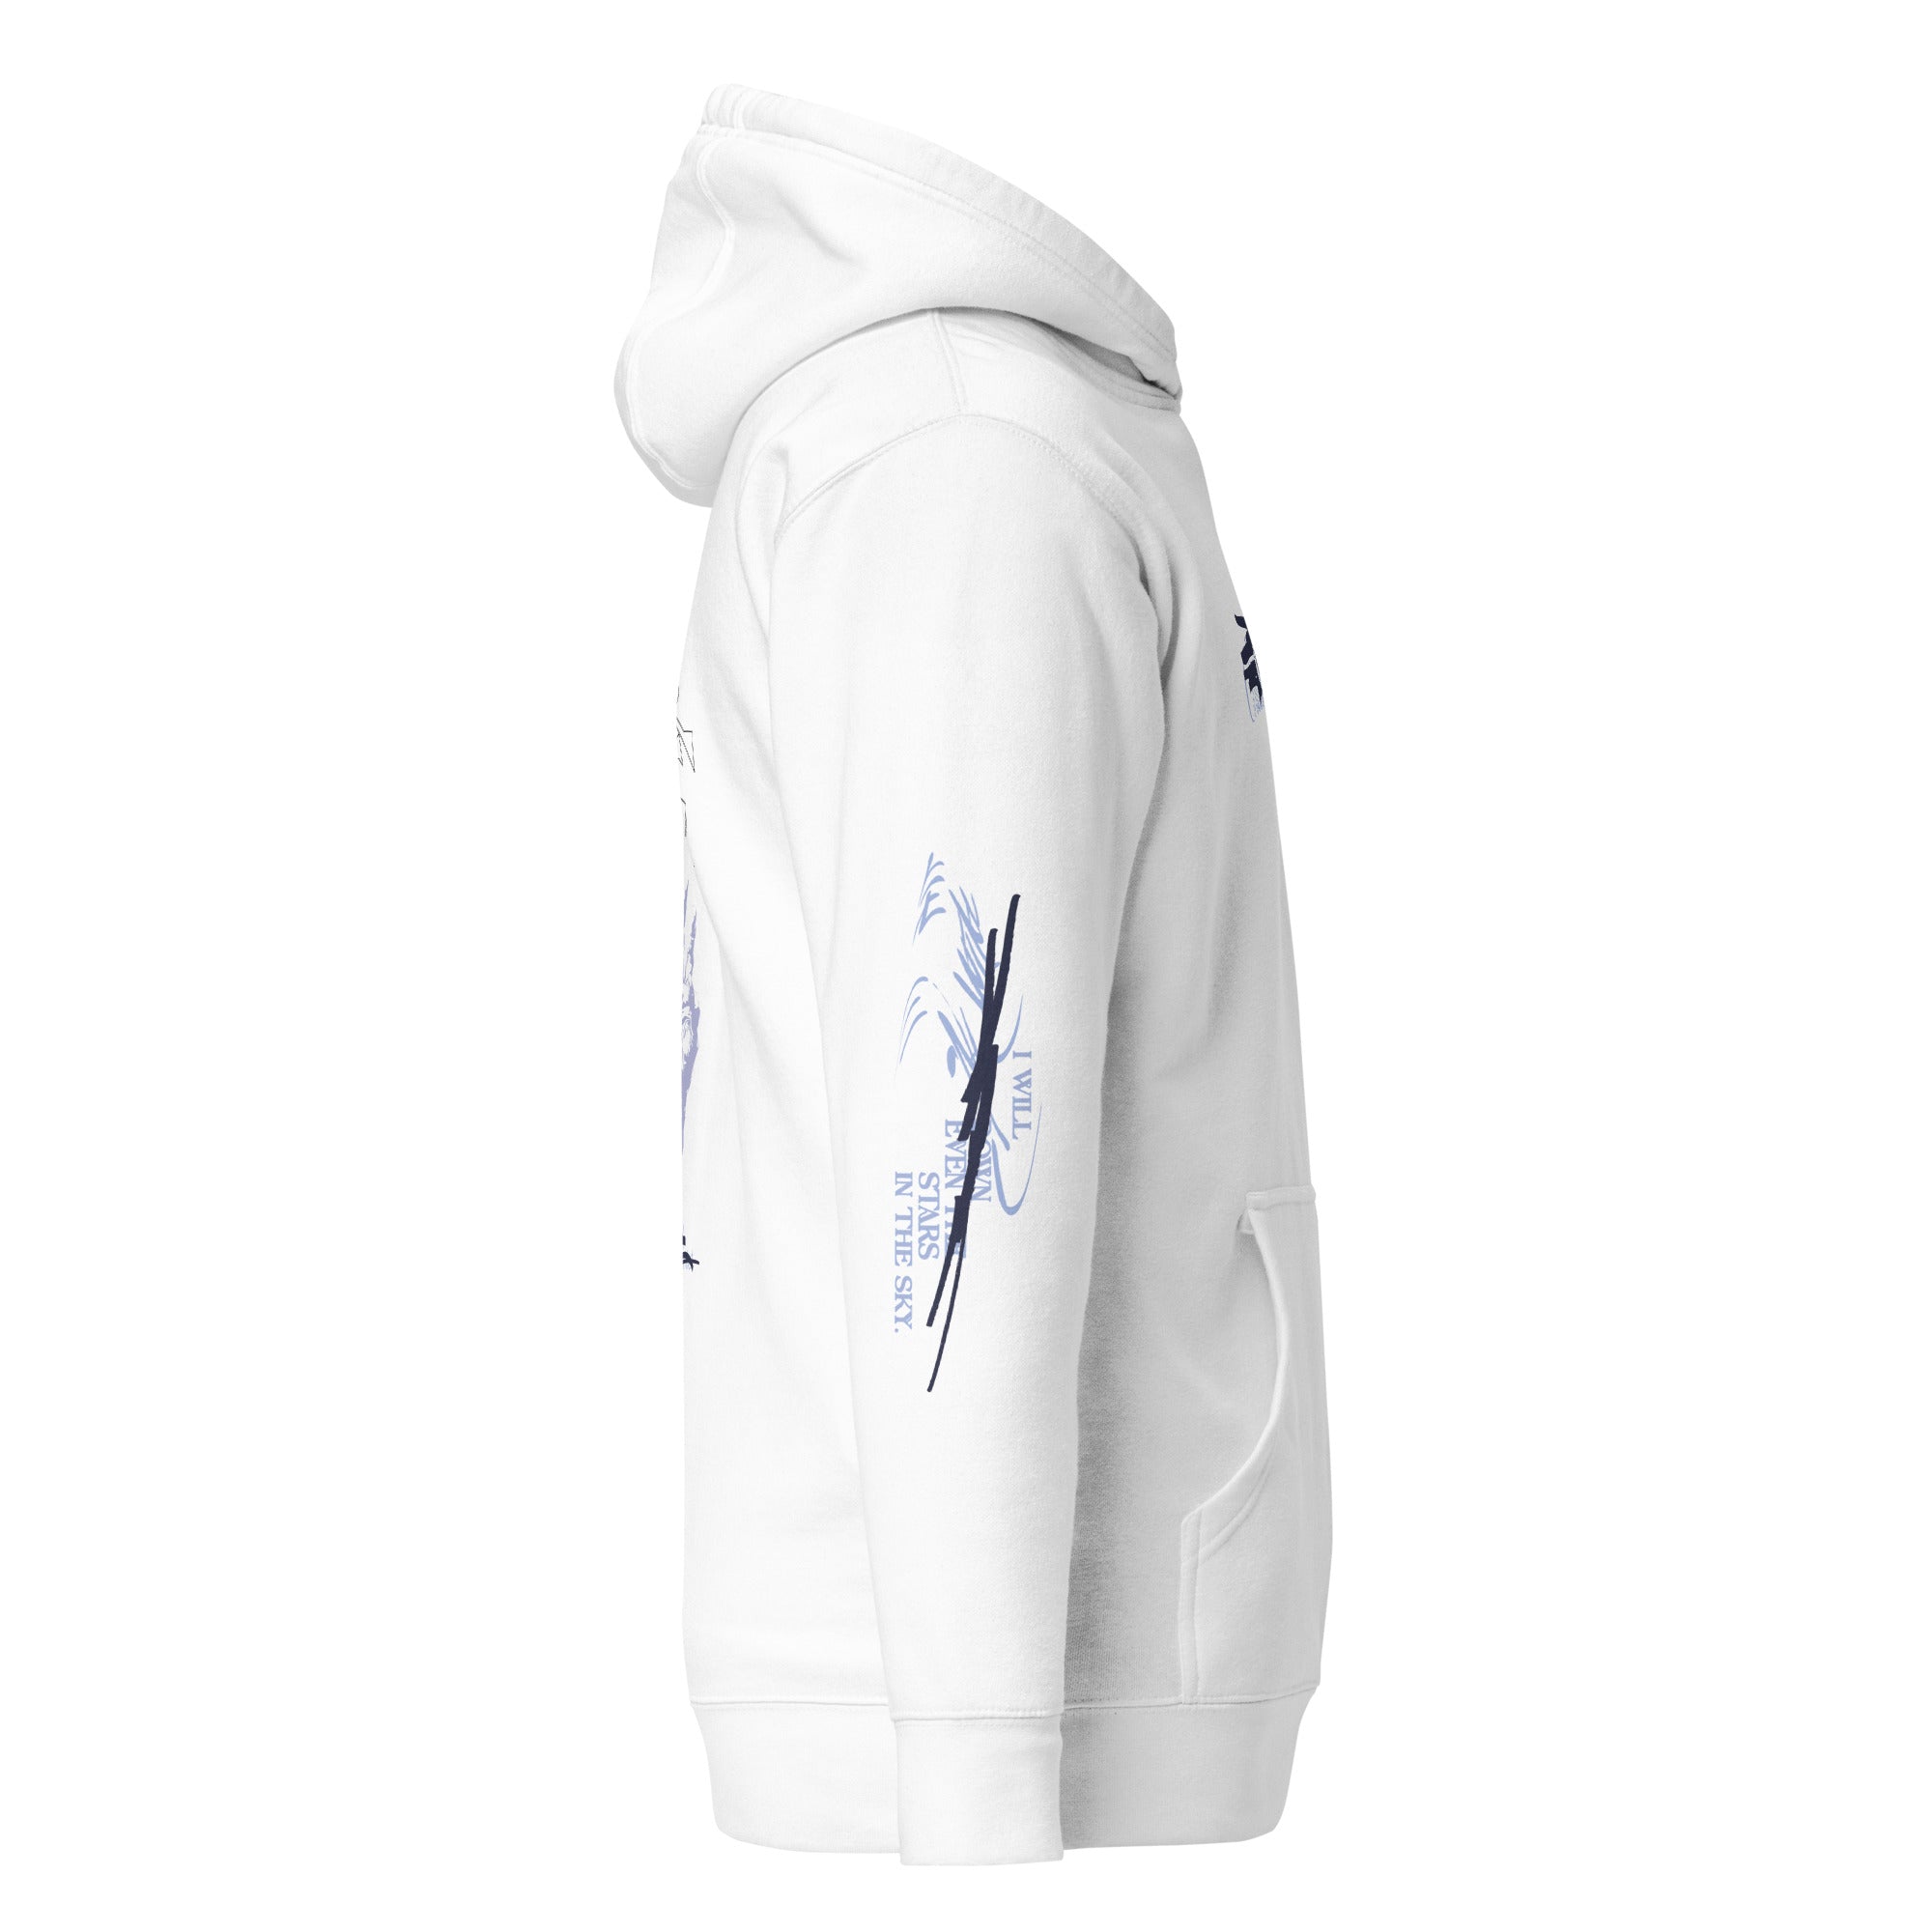 FINE LINE • hoodie - Jackler - anime-inspired streetwear - anime clothing